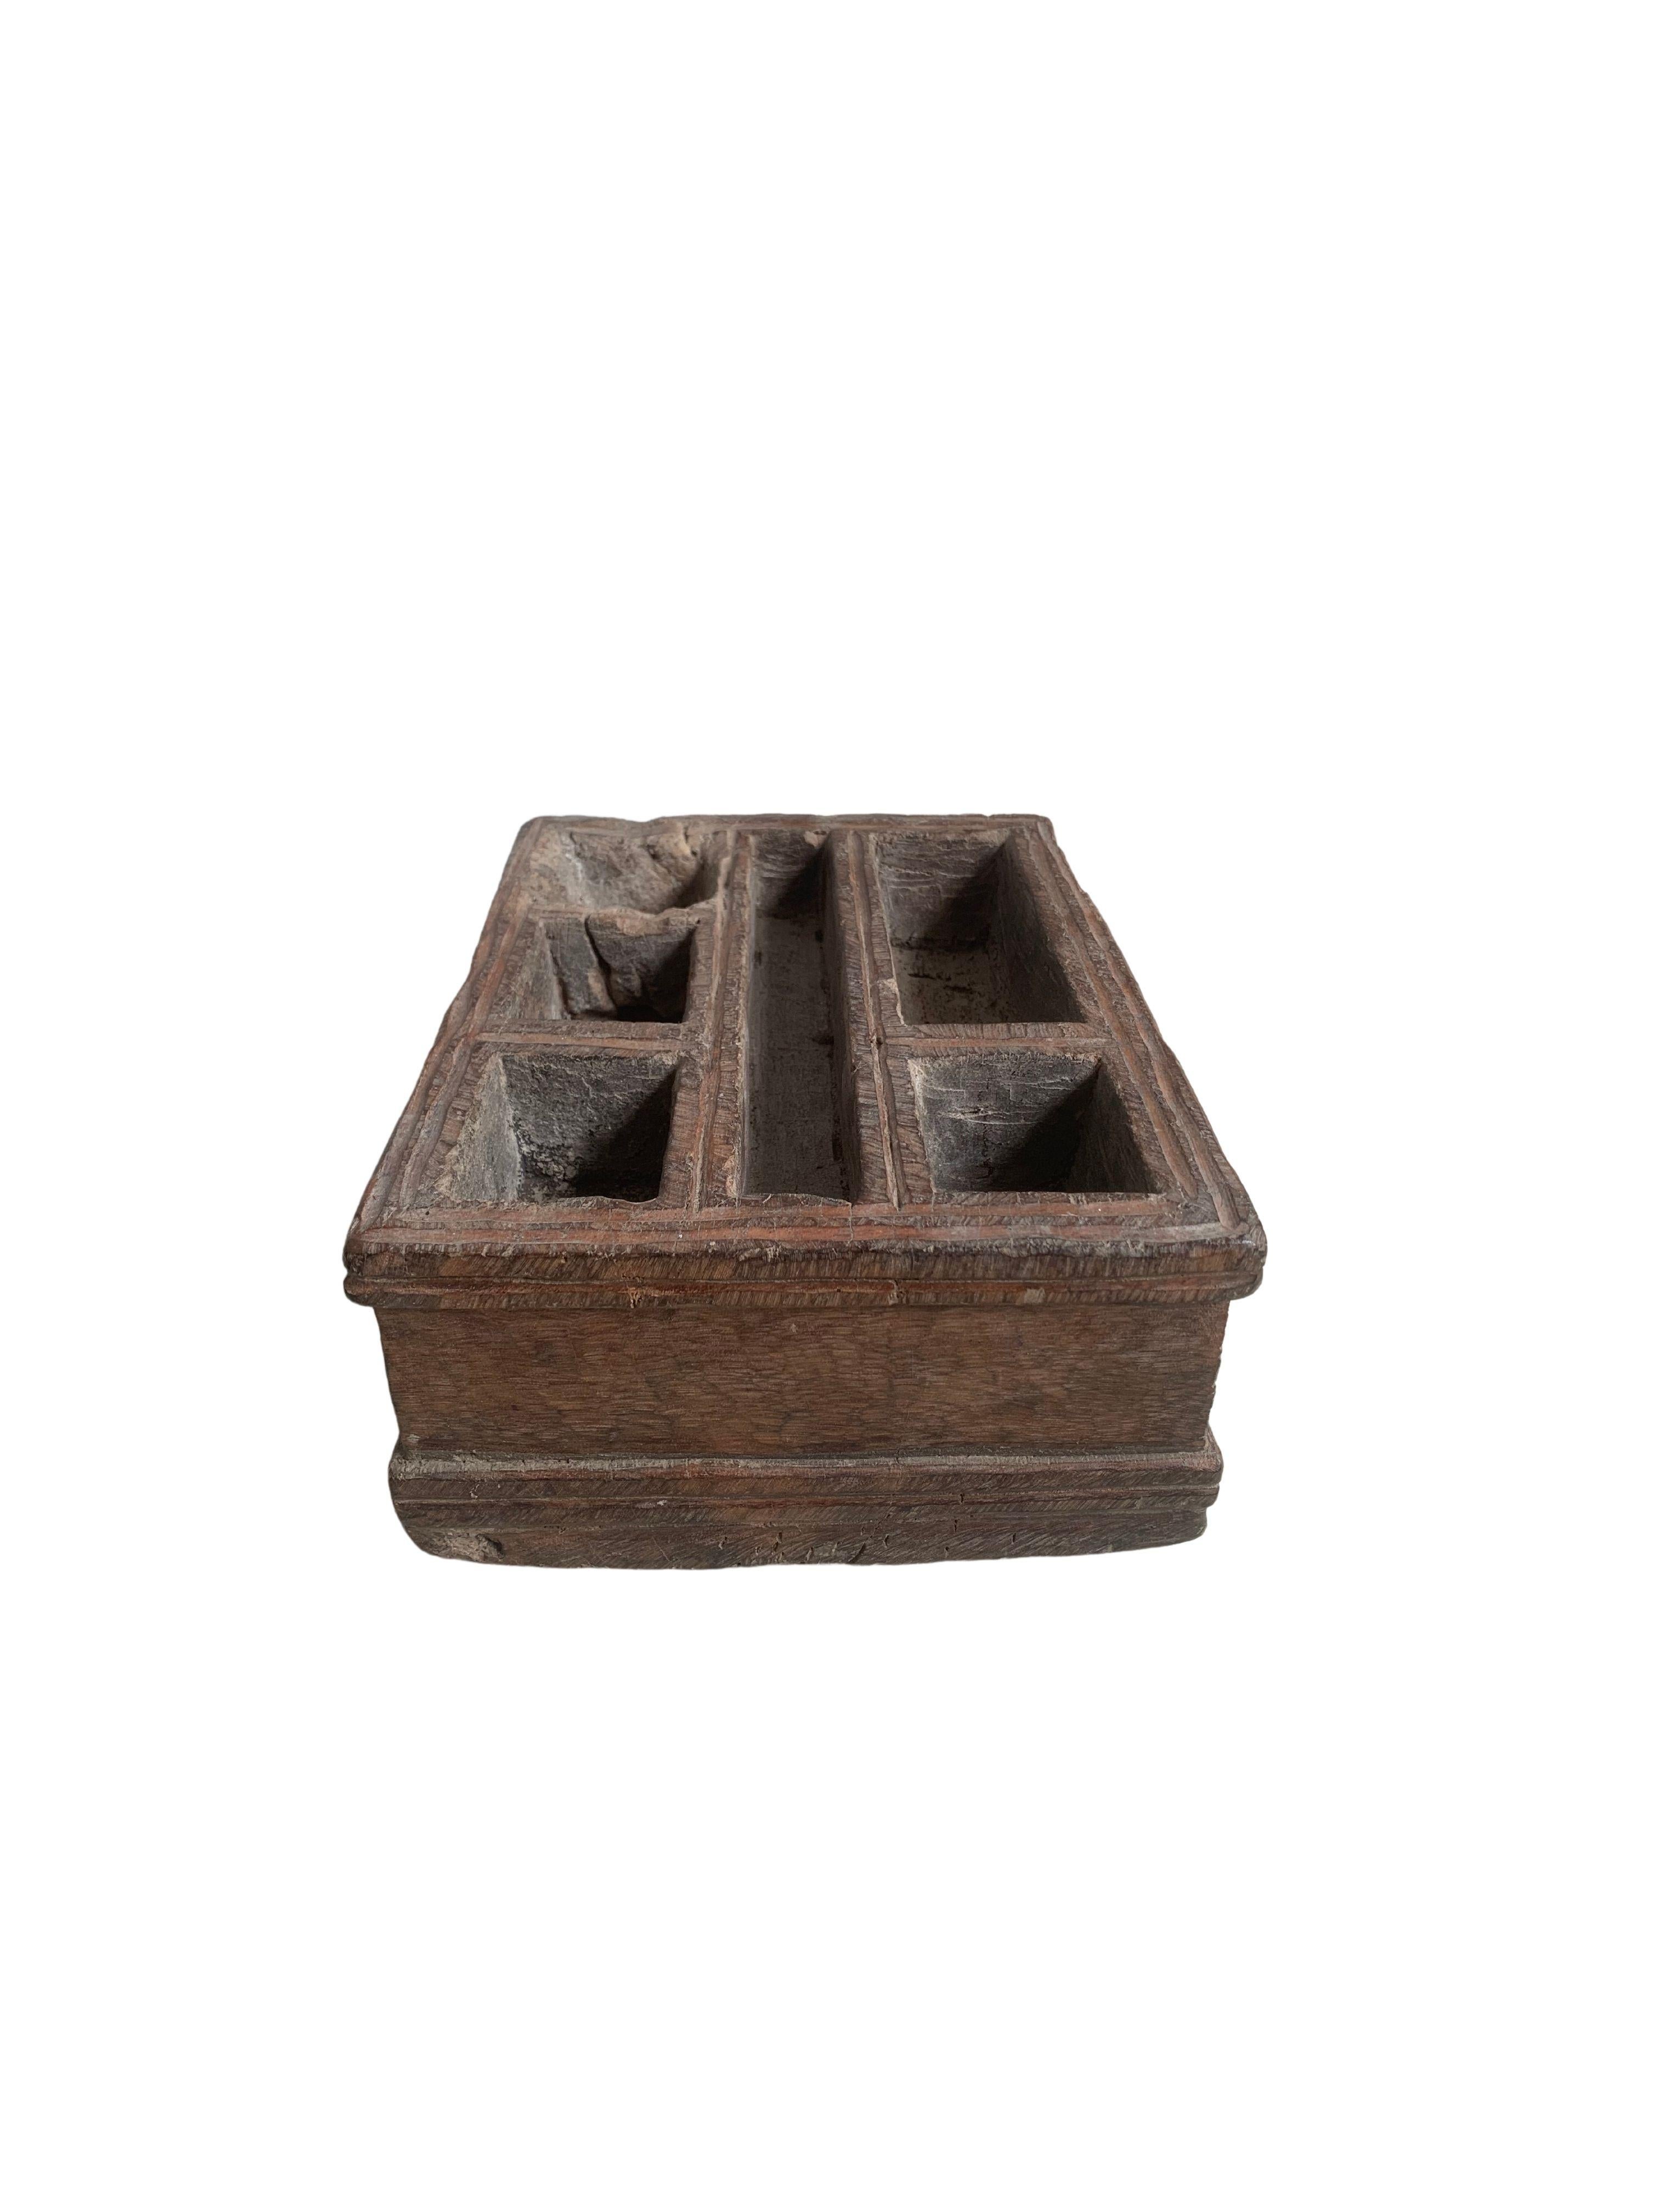 Indonesian Betel Nut Box from Java, Indonesia, c. 1900